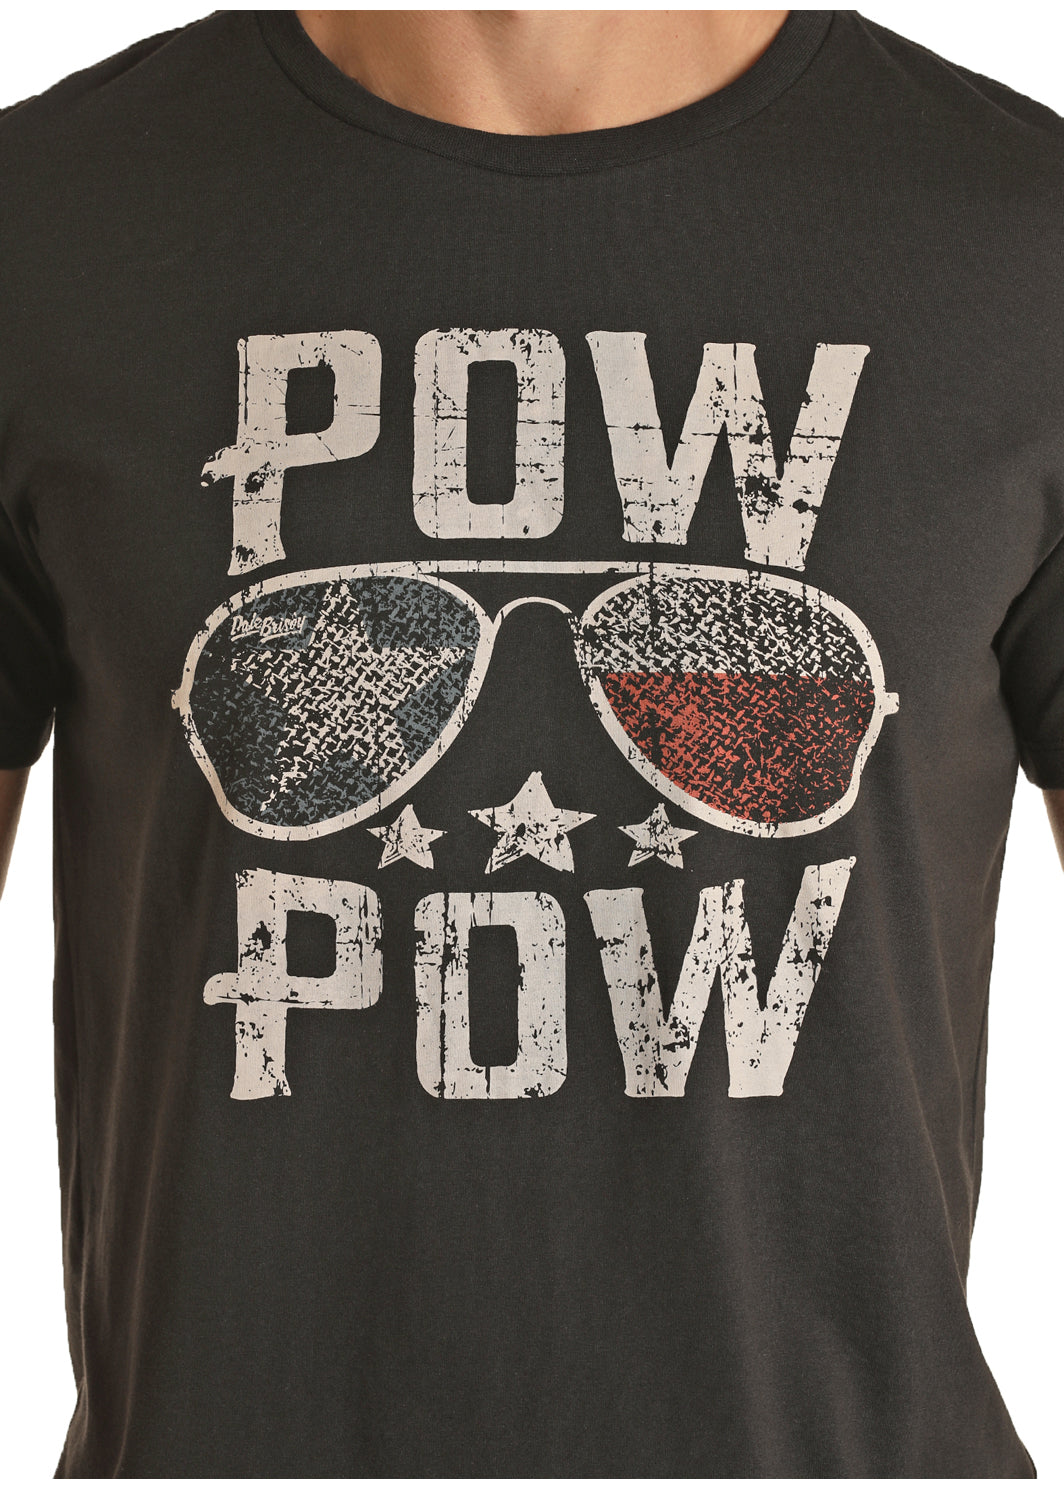 PowPow Sunglasses Black Men's T-Shirt